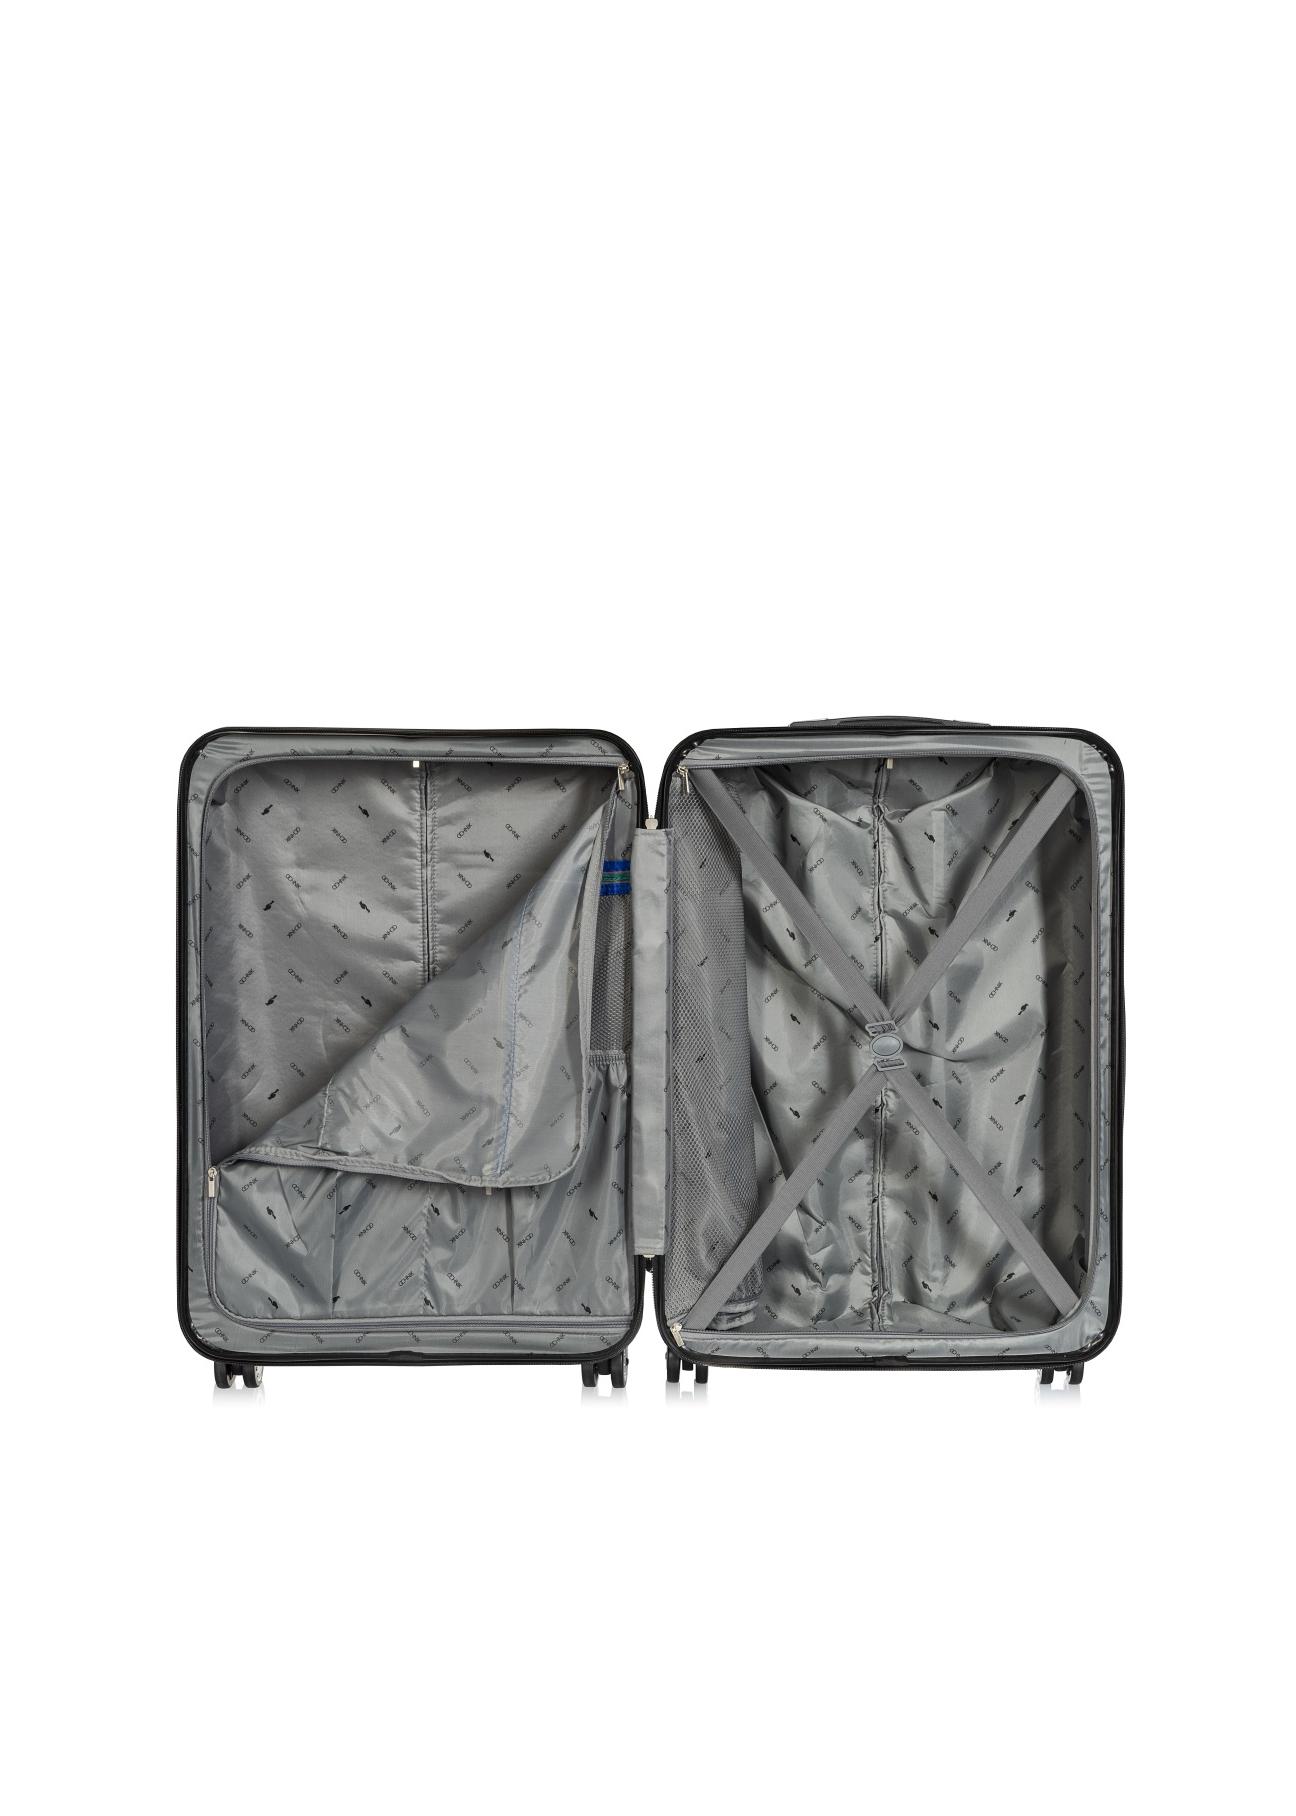 Duża walizka na kółkach WALAB-0031-51-28